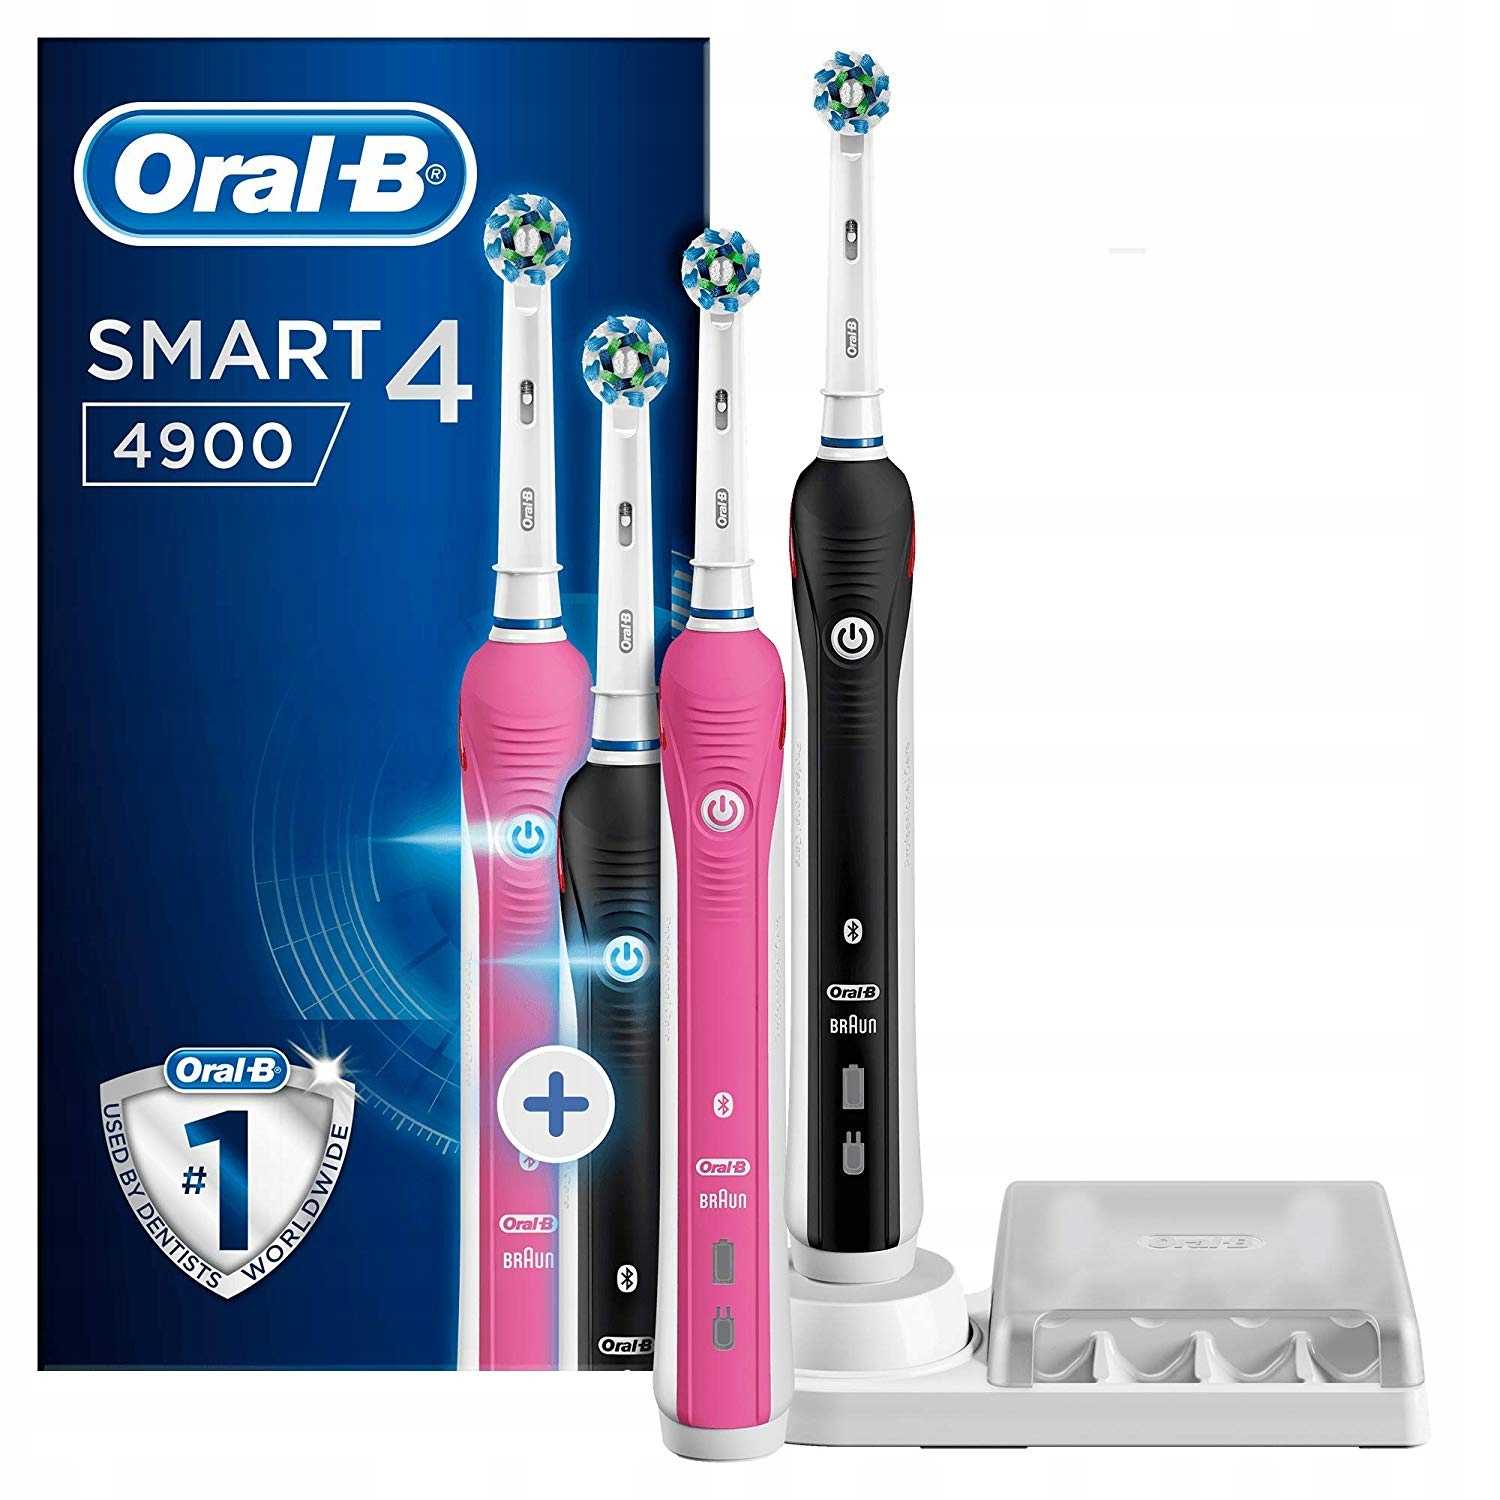 Oral-b smart 4 4000 review - electric teeth uk